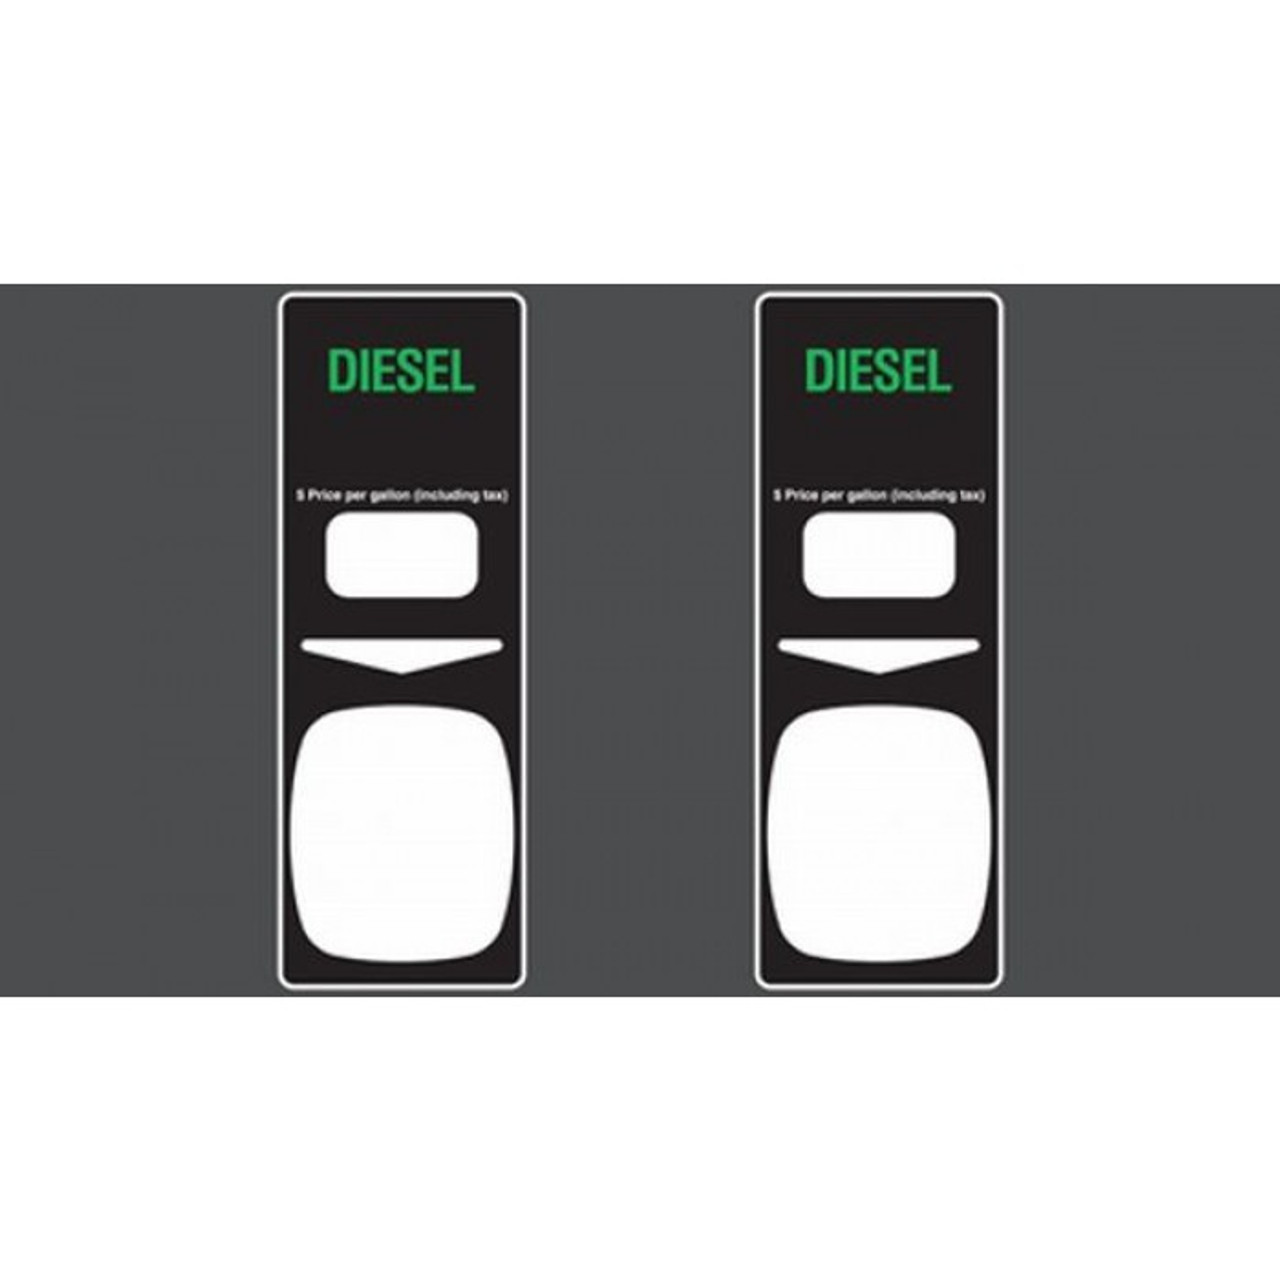 888459-002-0G2 - Diesel PTS Panel Overlay